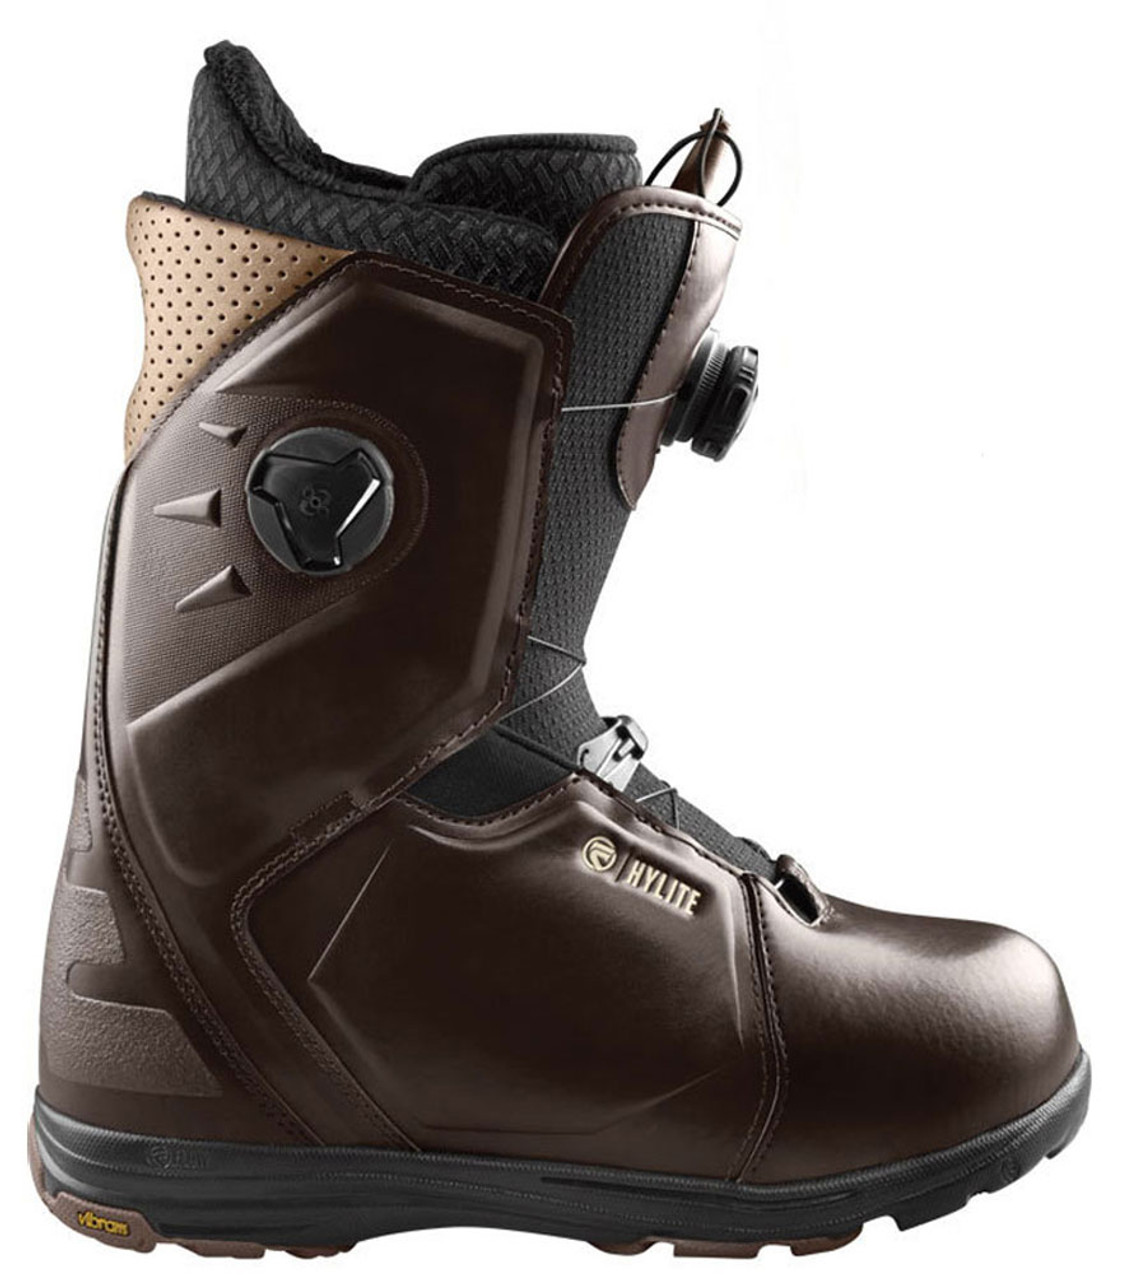 Flow Hylite Heel-Lock Focus Dual BOA Men's Snowboard Boots - Size 11